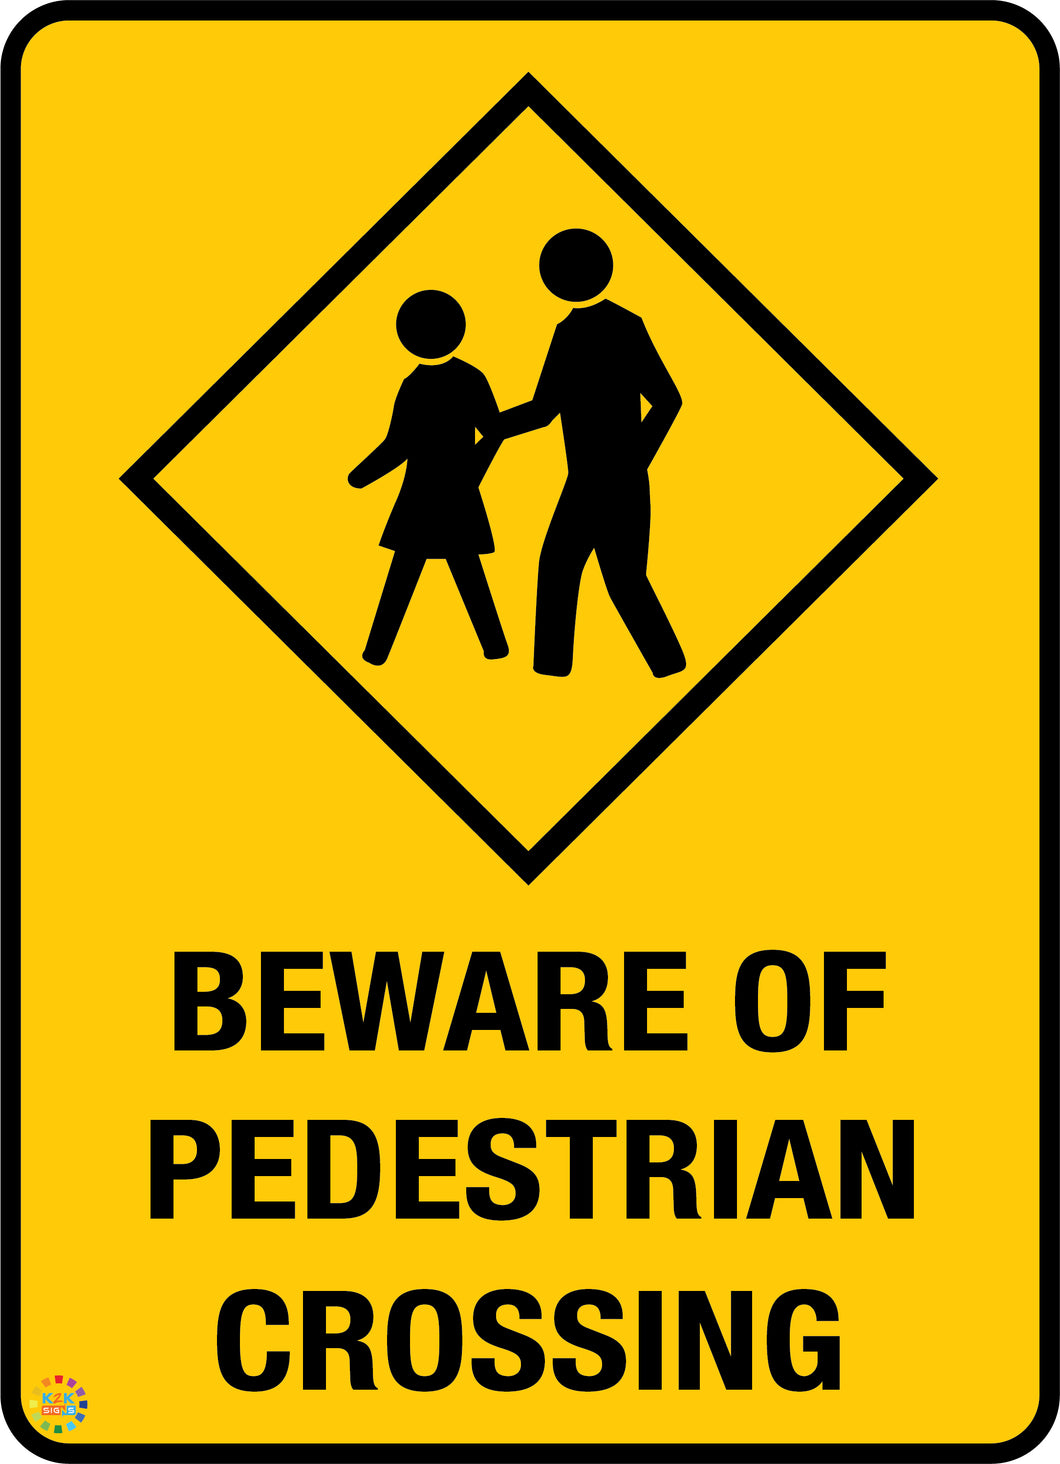 Beware of Pedestrian Crossing Sign